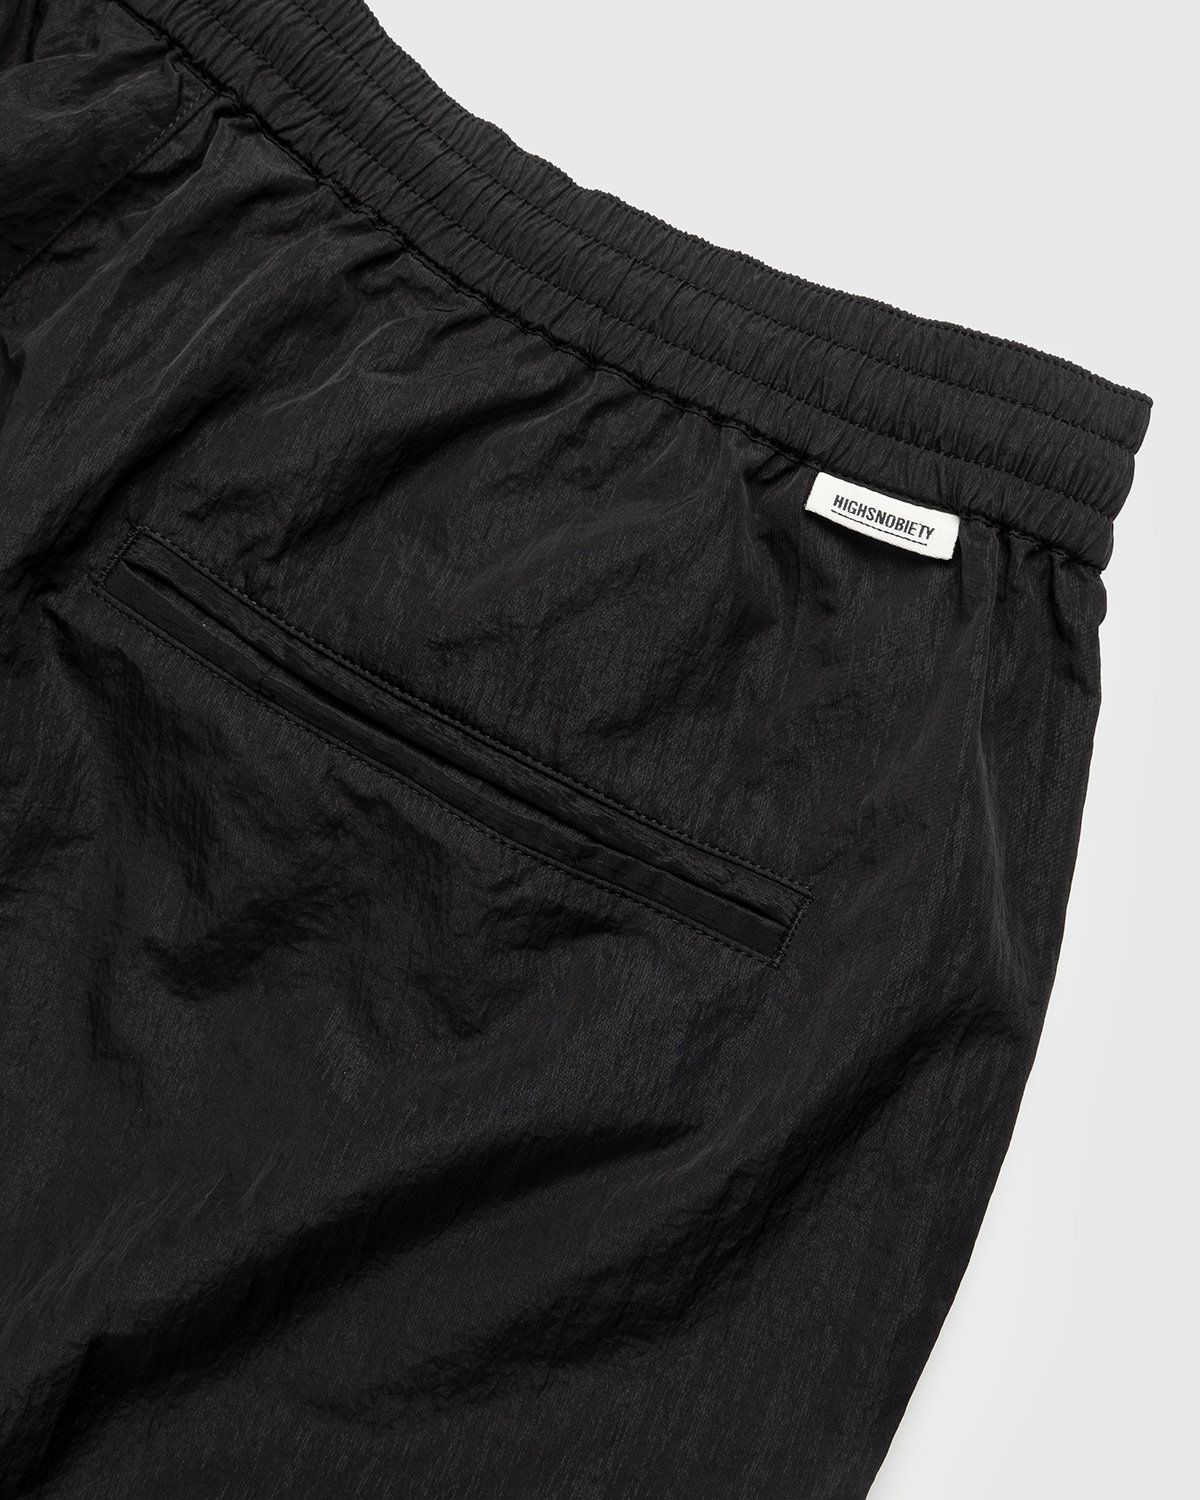 Highsnobiety – Crepe Nylon Shorts Black - Shorts - Black - Image 3